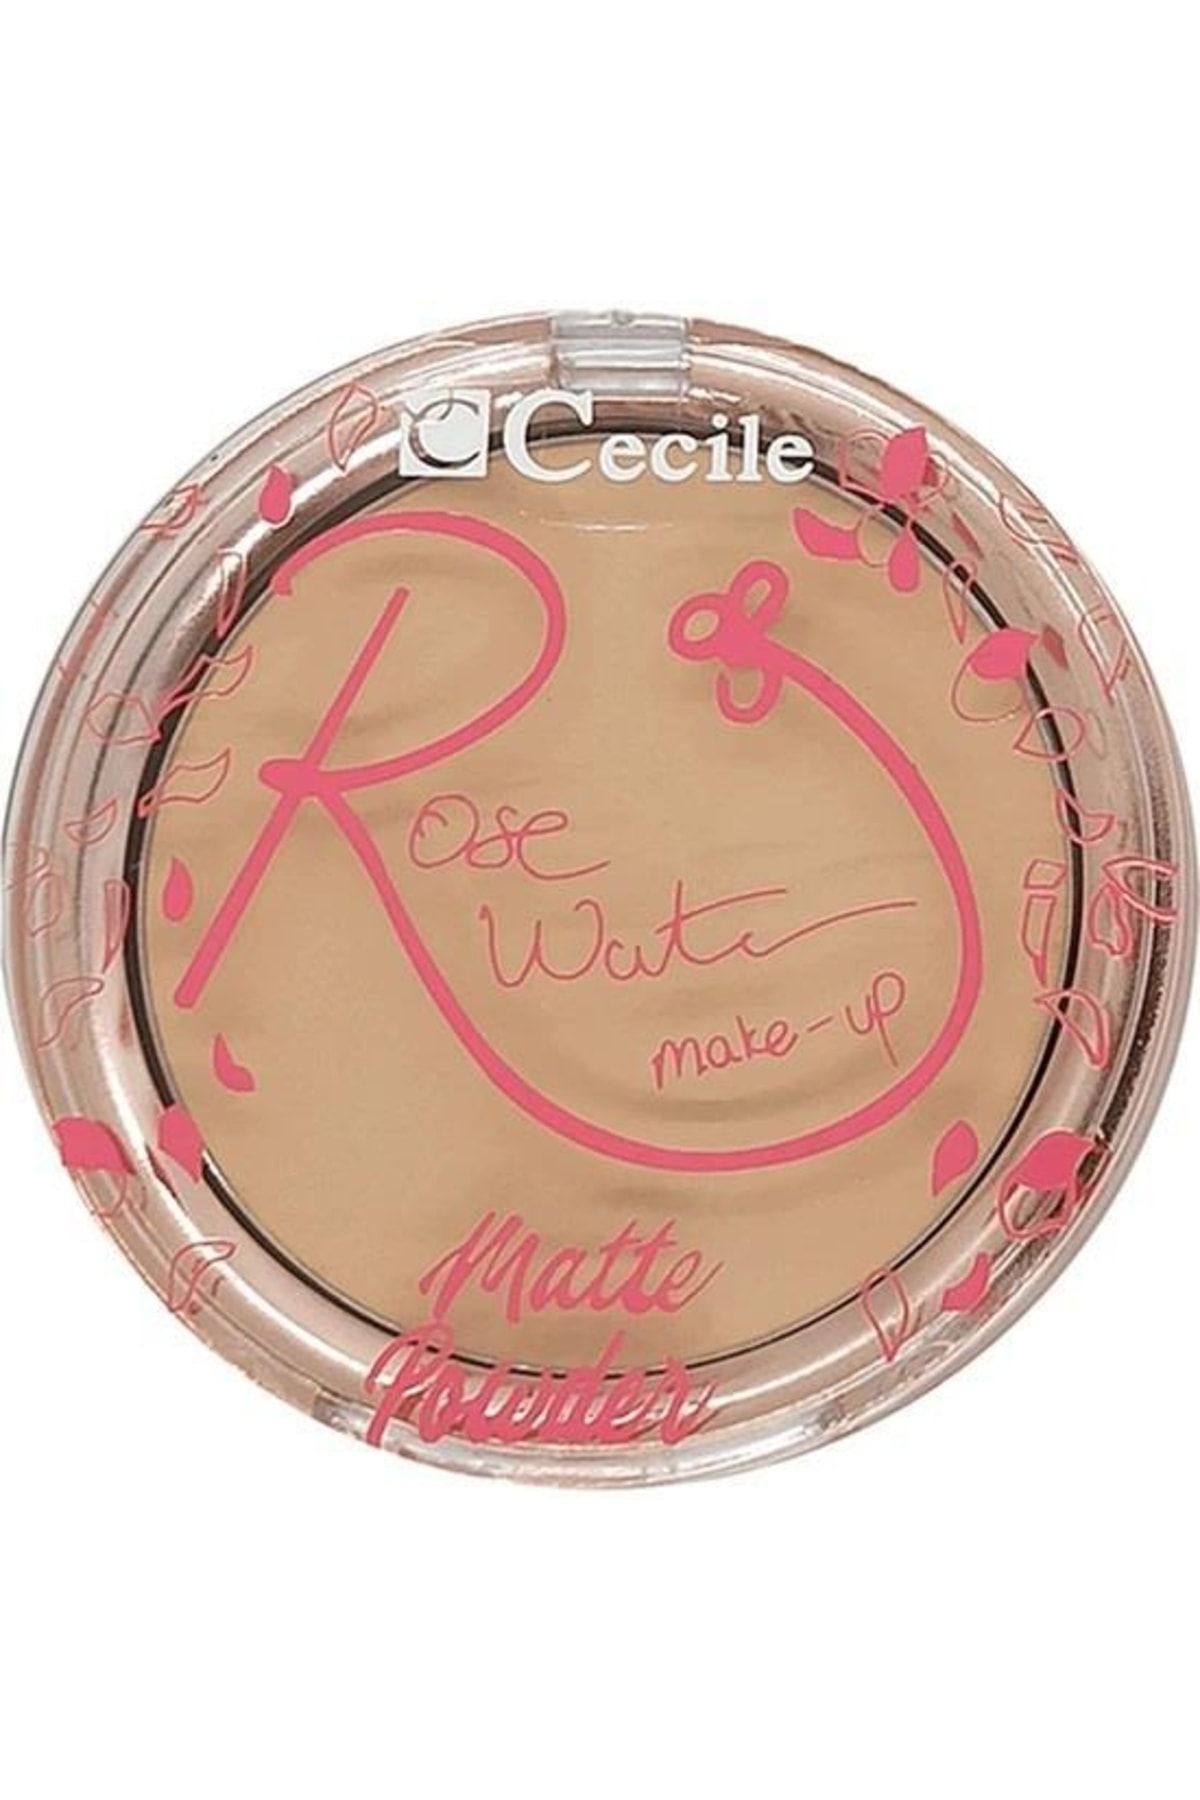 Cecile Rose Water Matte Powder Pudra 01